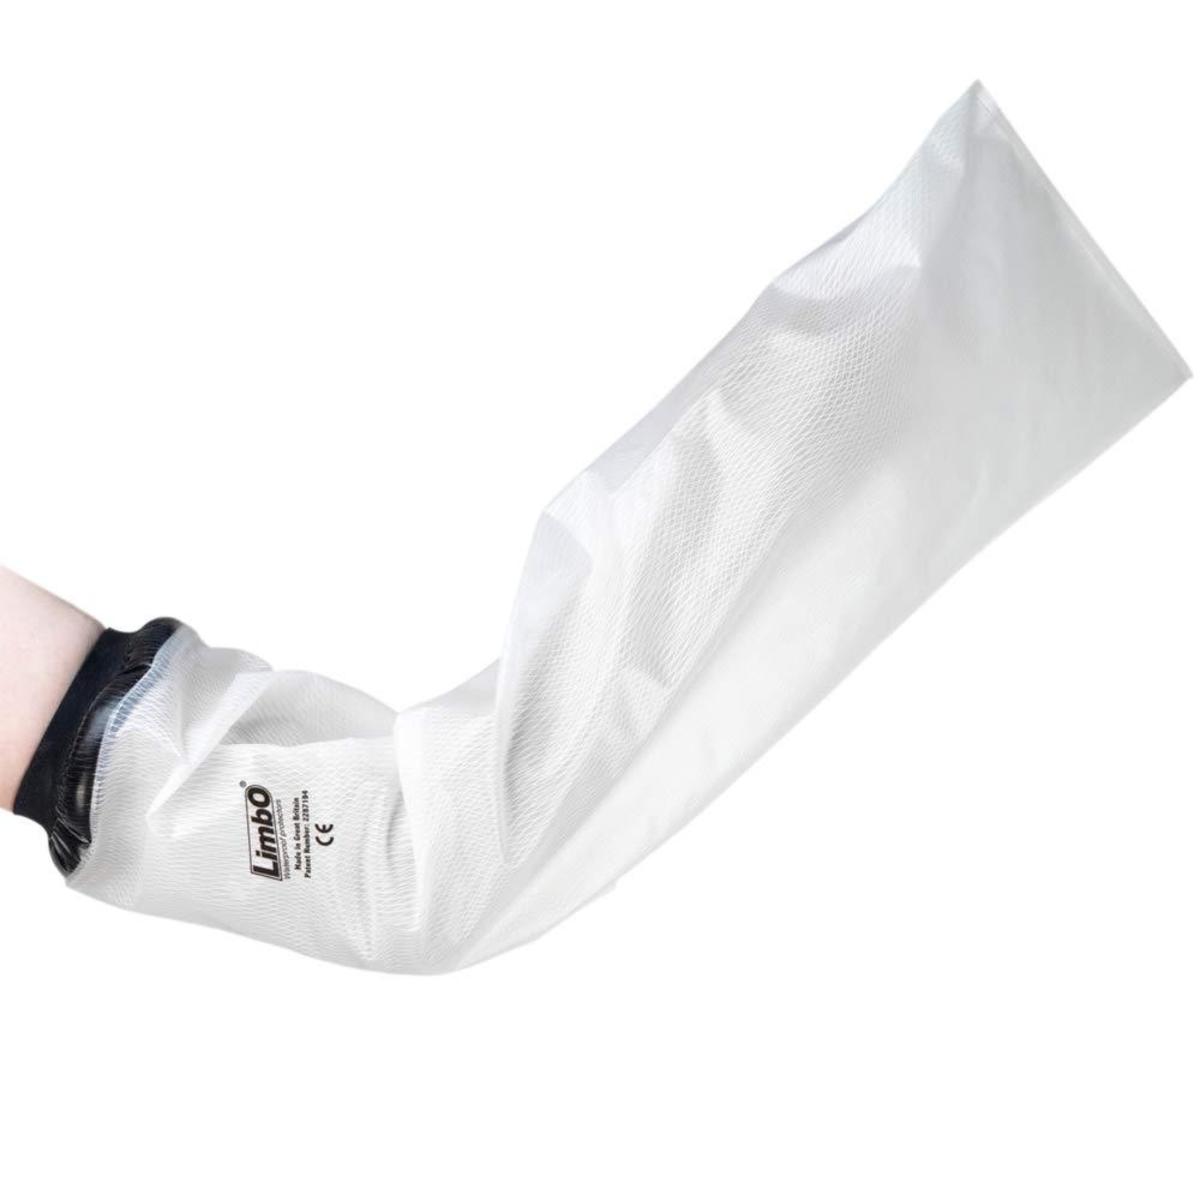 LimbO Adult Below-Elbow Waterproof Protector Review